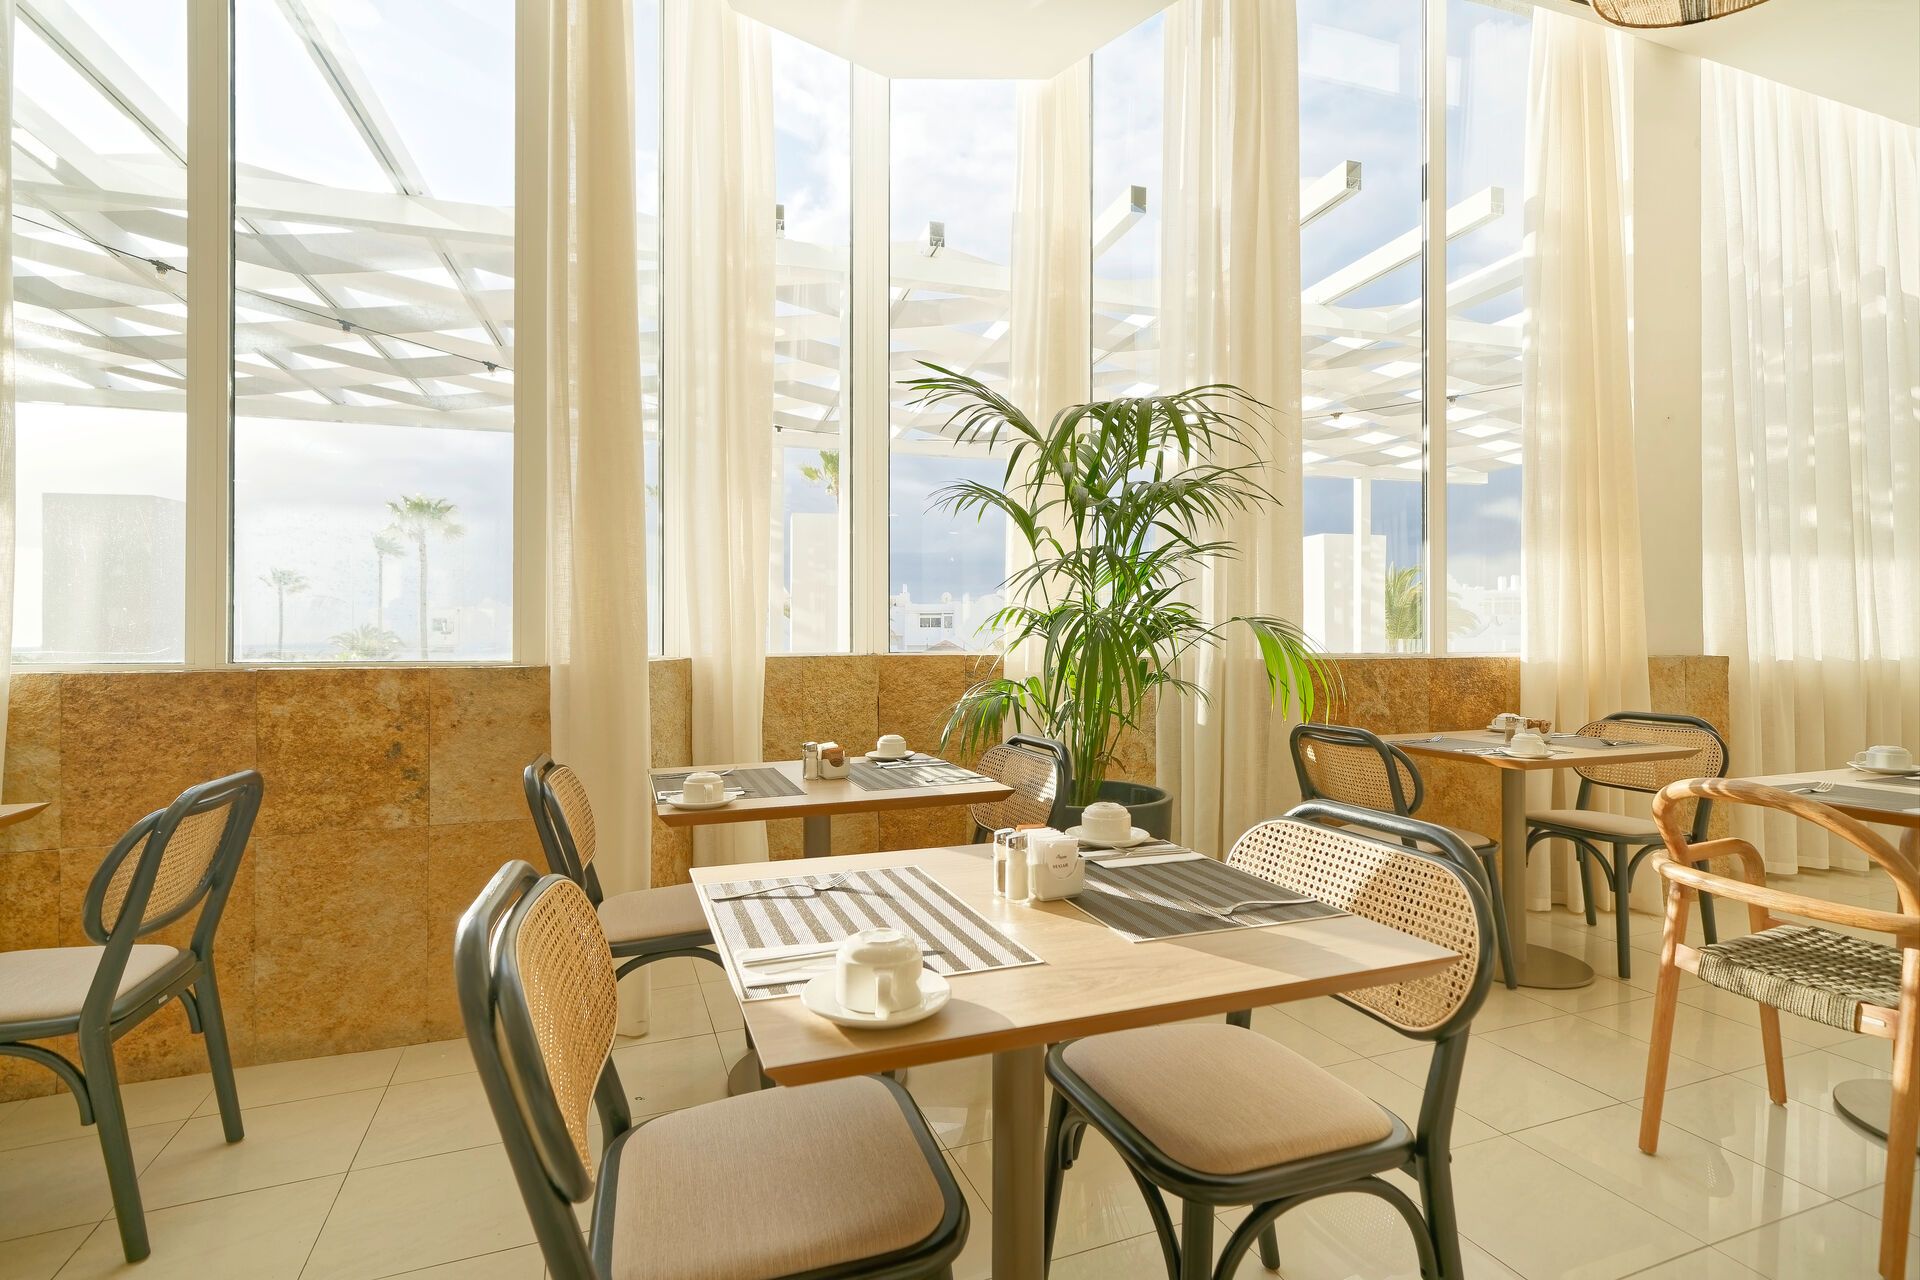 Canaries - Fuerteventura - Espagne - Hôtel Labranda Golden Beach 3* - Adult Only